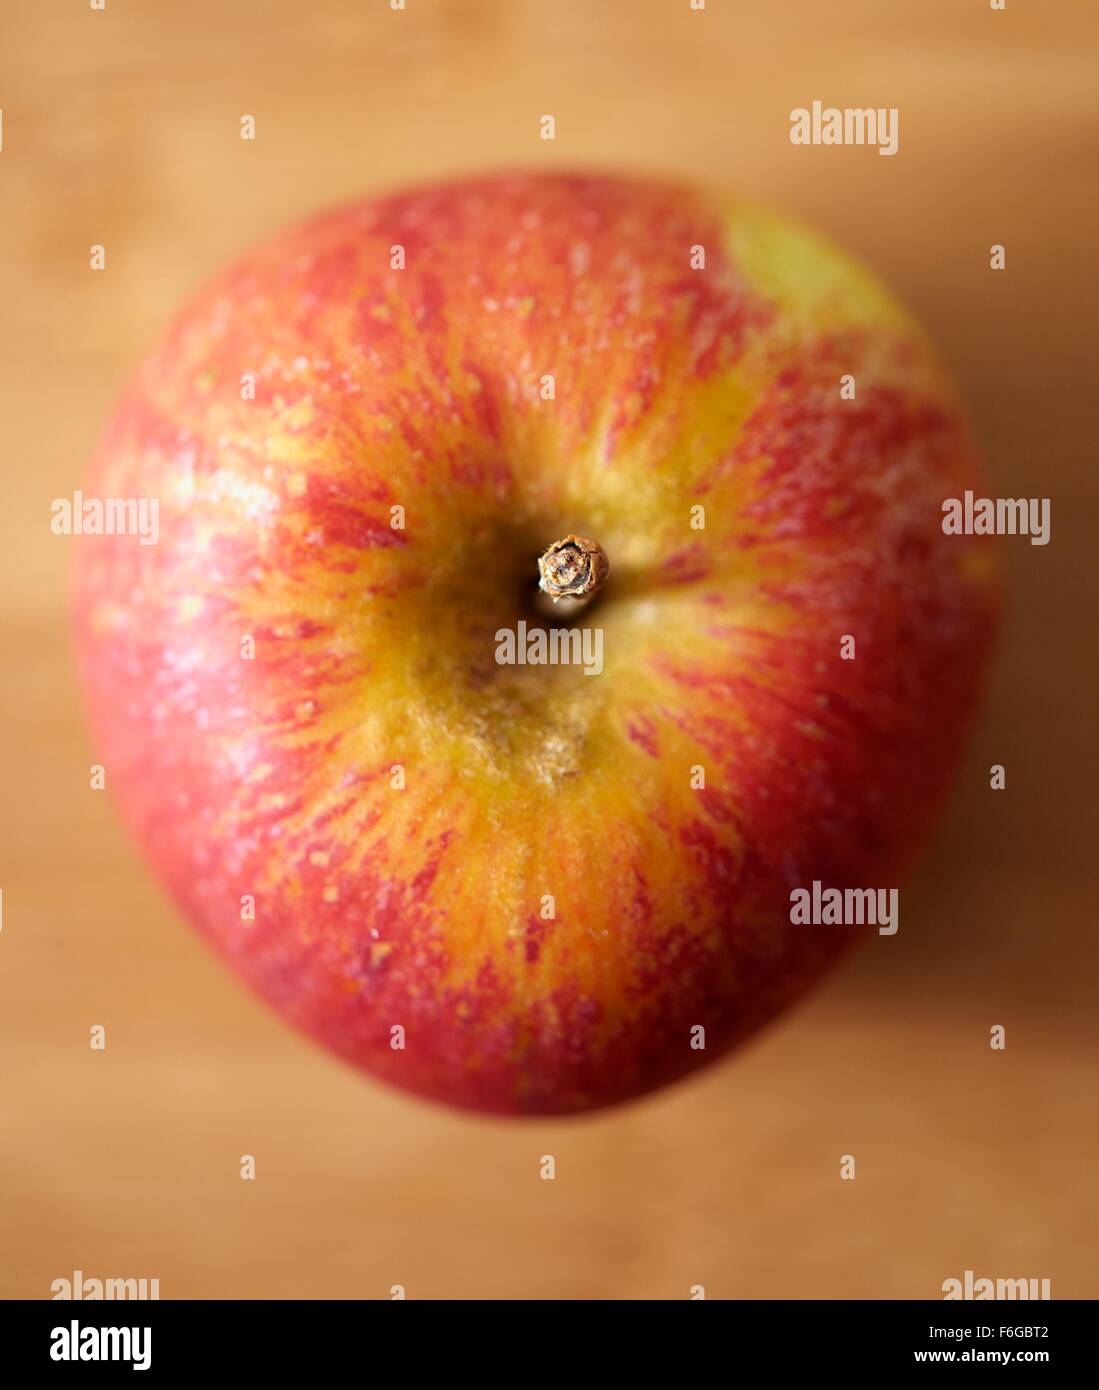 Cox's orange pippin apple close up macro Stock Photo